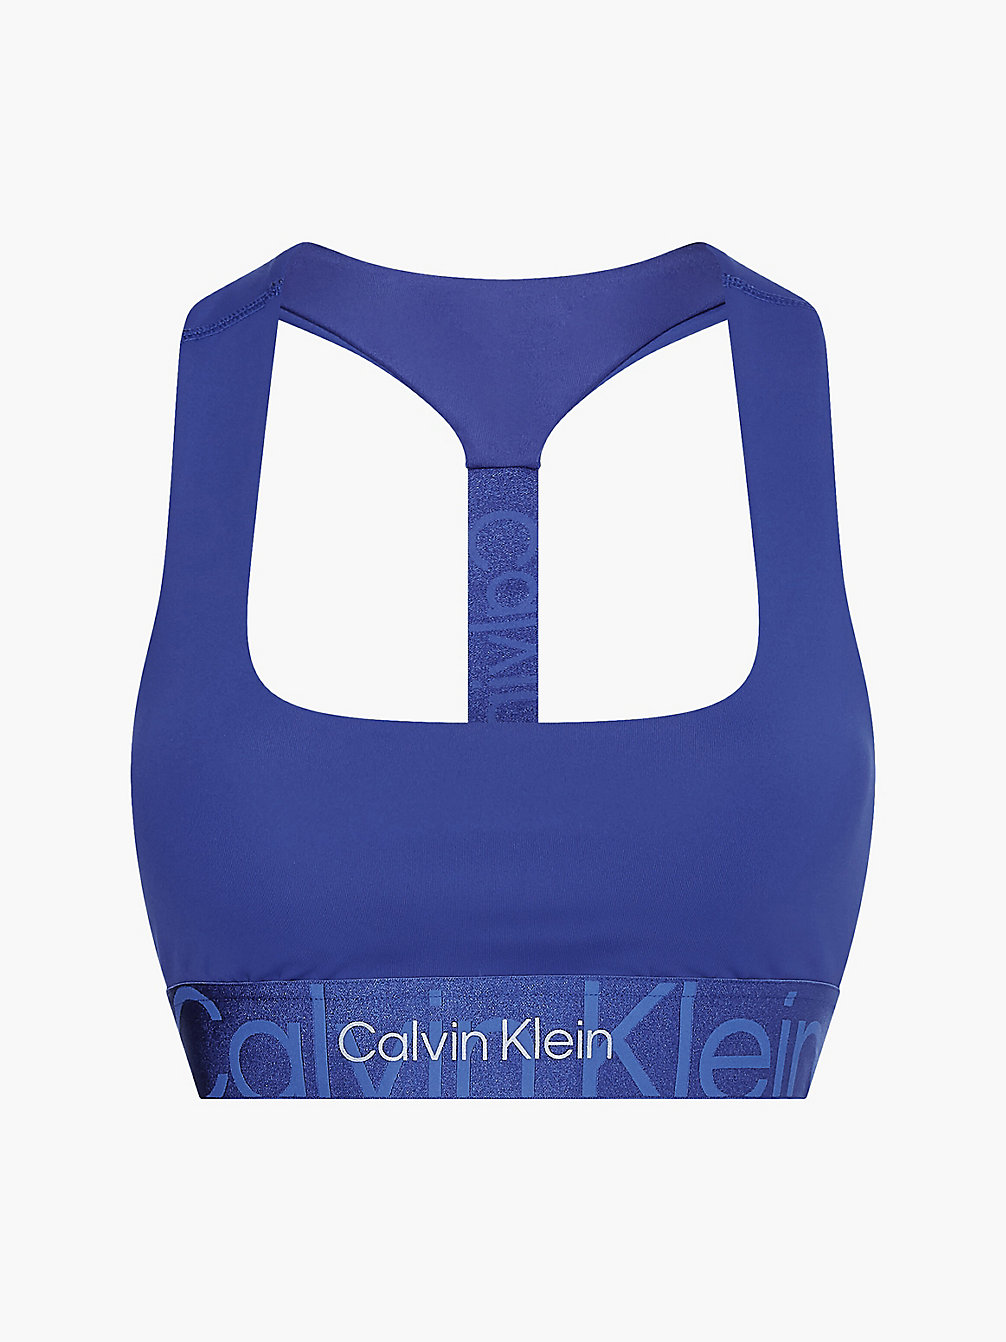 CLEMATIS BLUE Recycled Medium Impact Sports Bra undefined women Calvin Klein